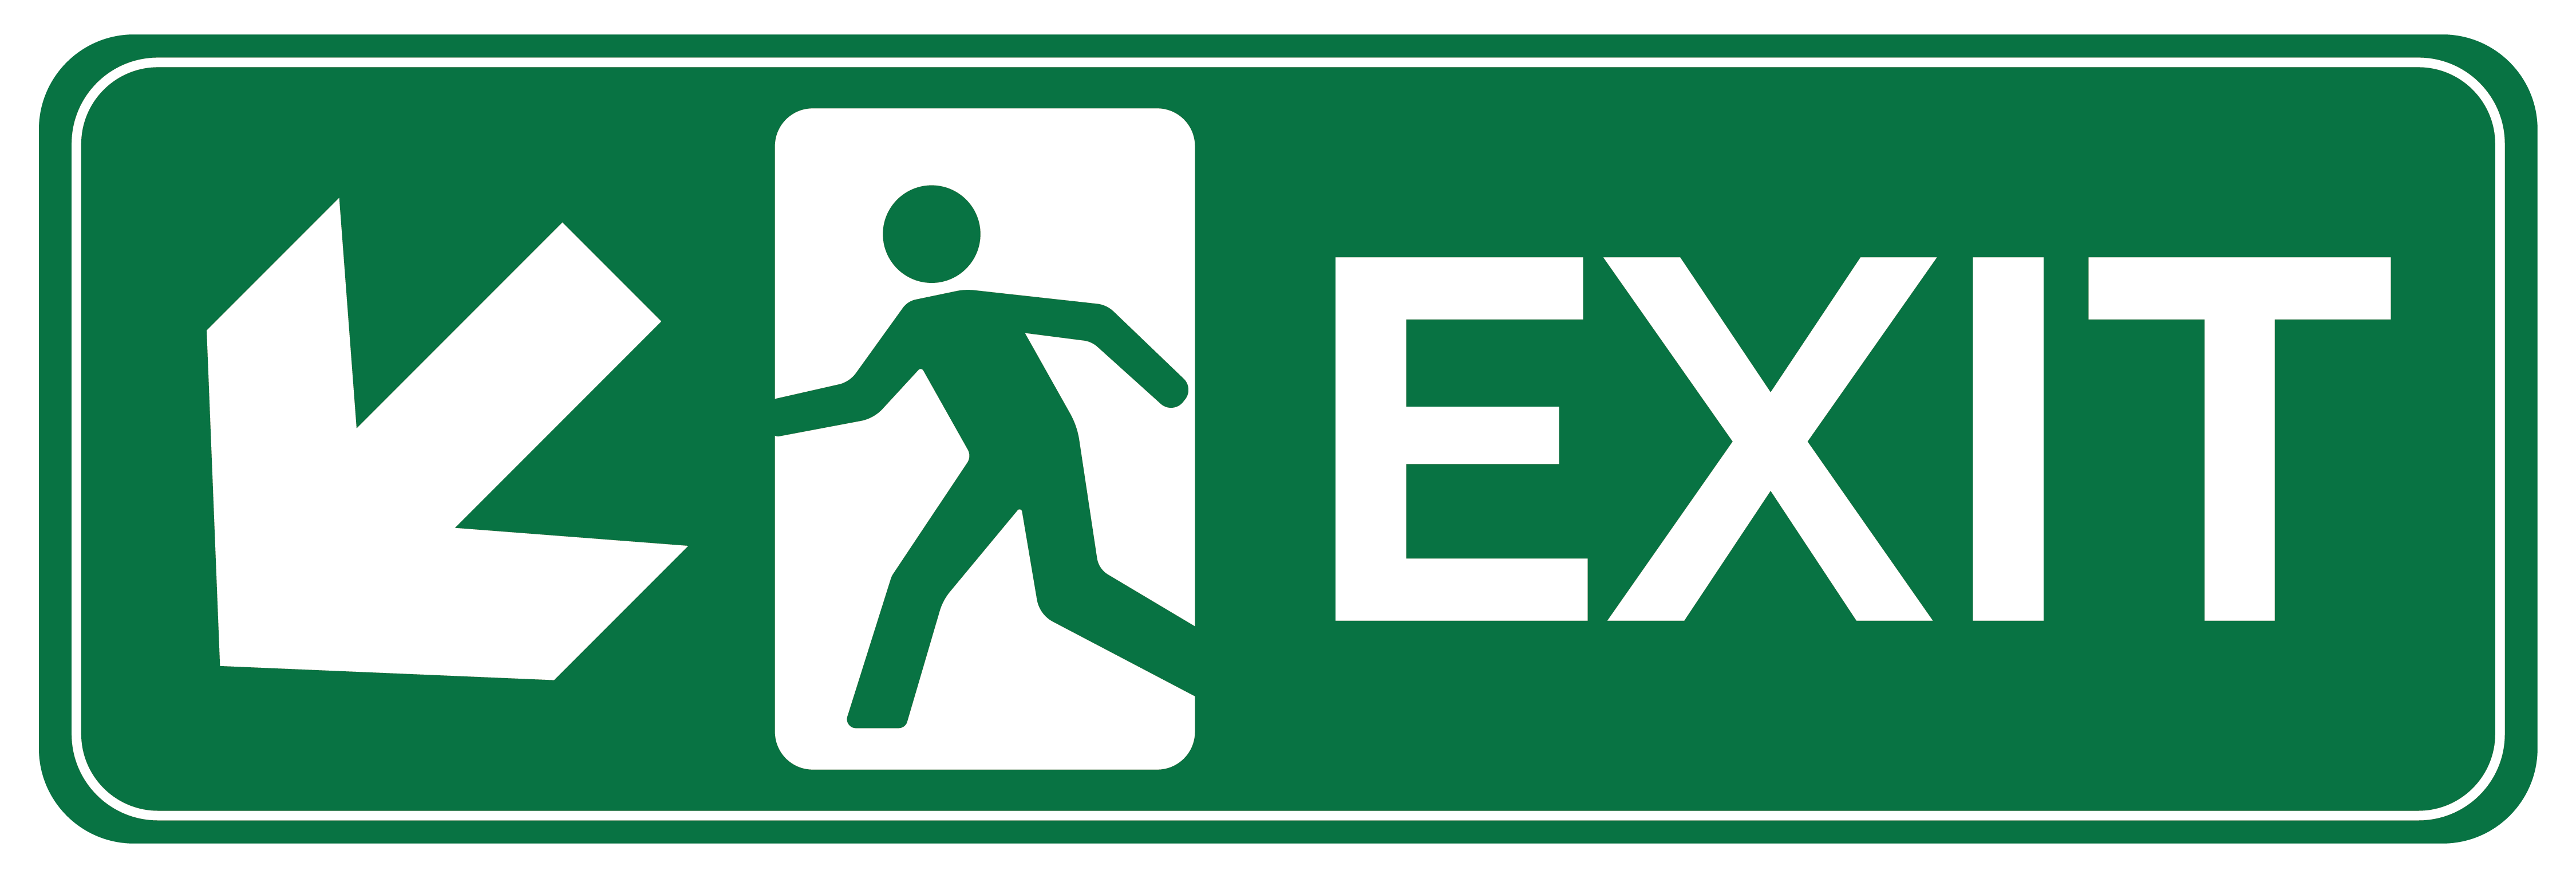 Fire Exit sticker arrow diagornal left - Pictogram vinyl sticker